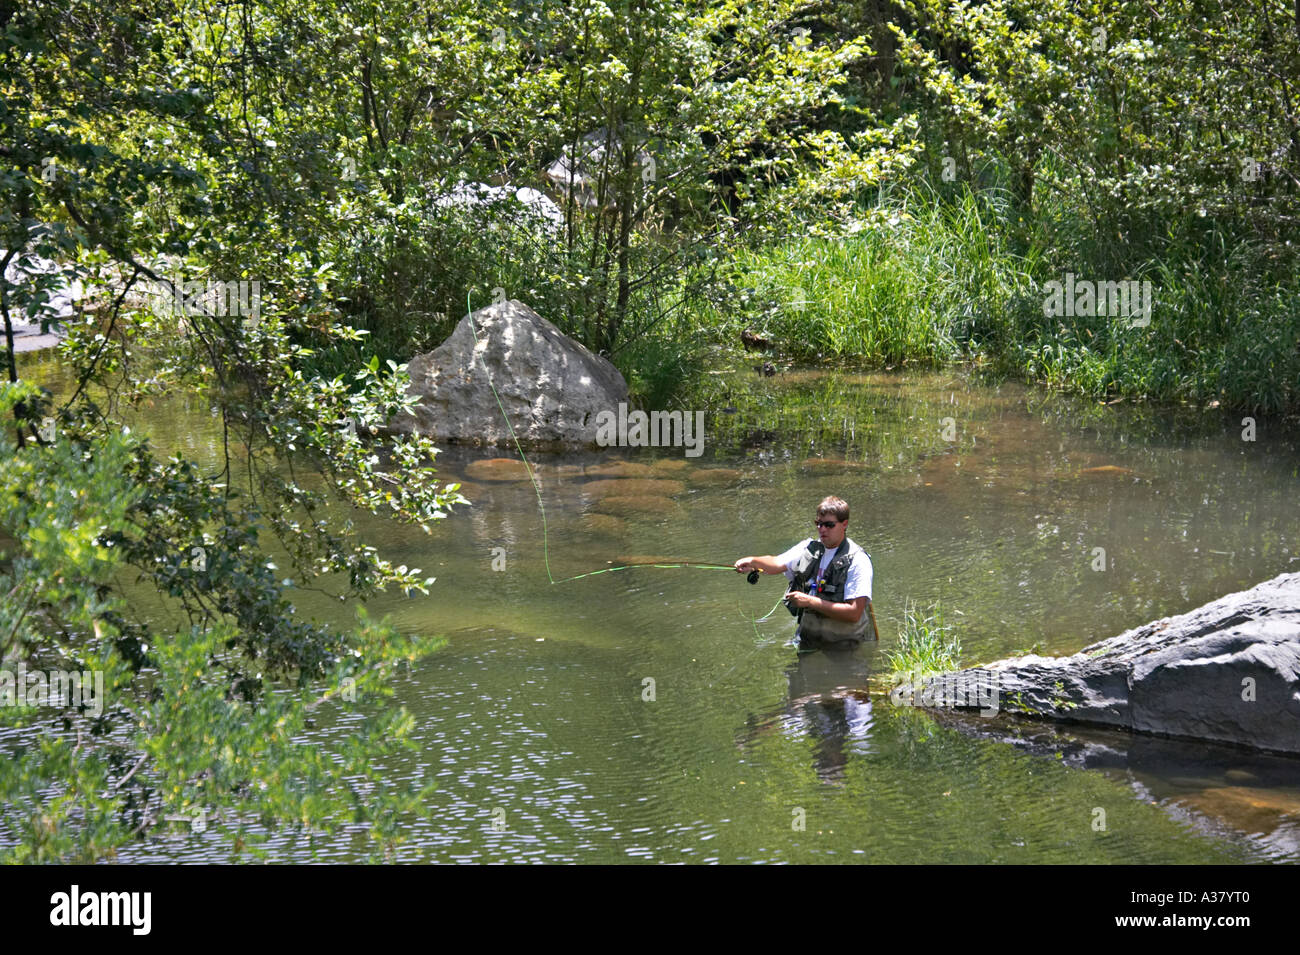 ARIZONA Sedona Teenage boy fly fish in Oak Creek narrow with trees along  banks waders and fly rod casting line deep water Stock Photo - Alamy